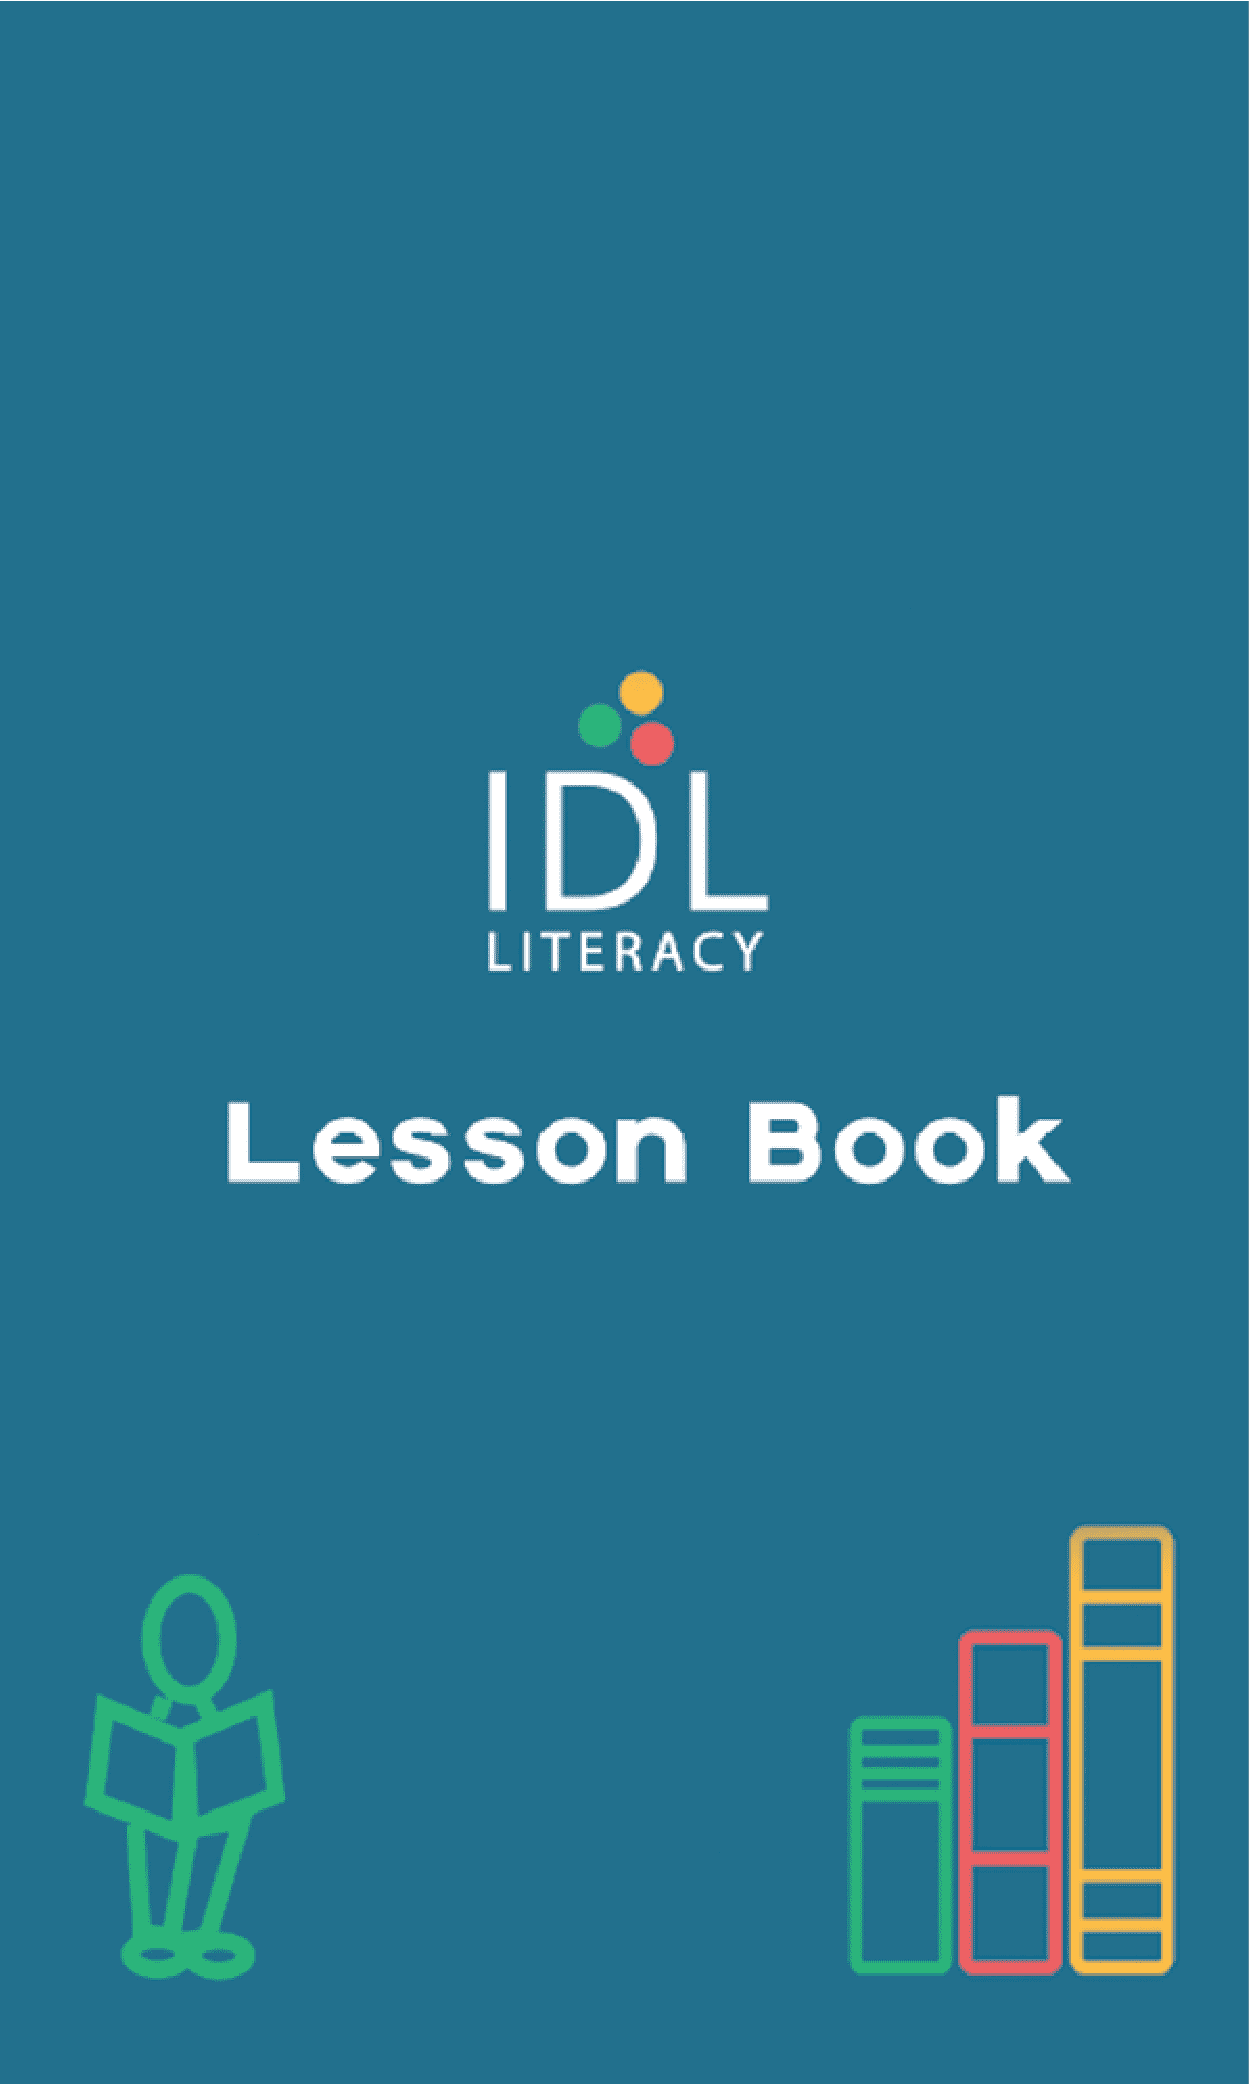 IDL Literacy Lesson Book